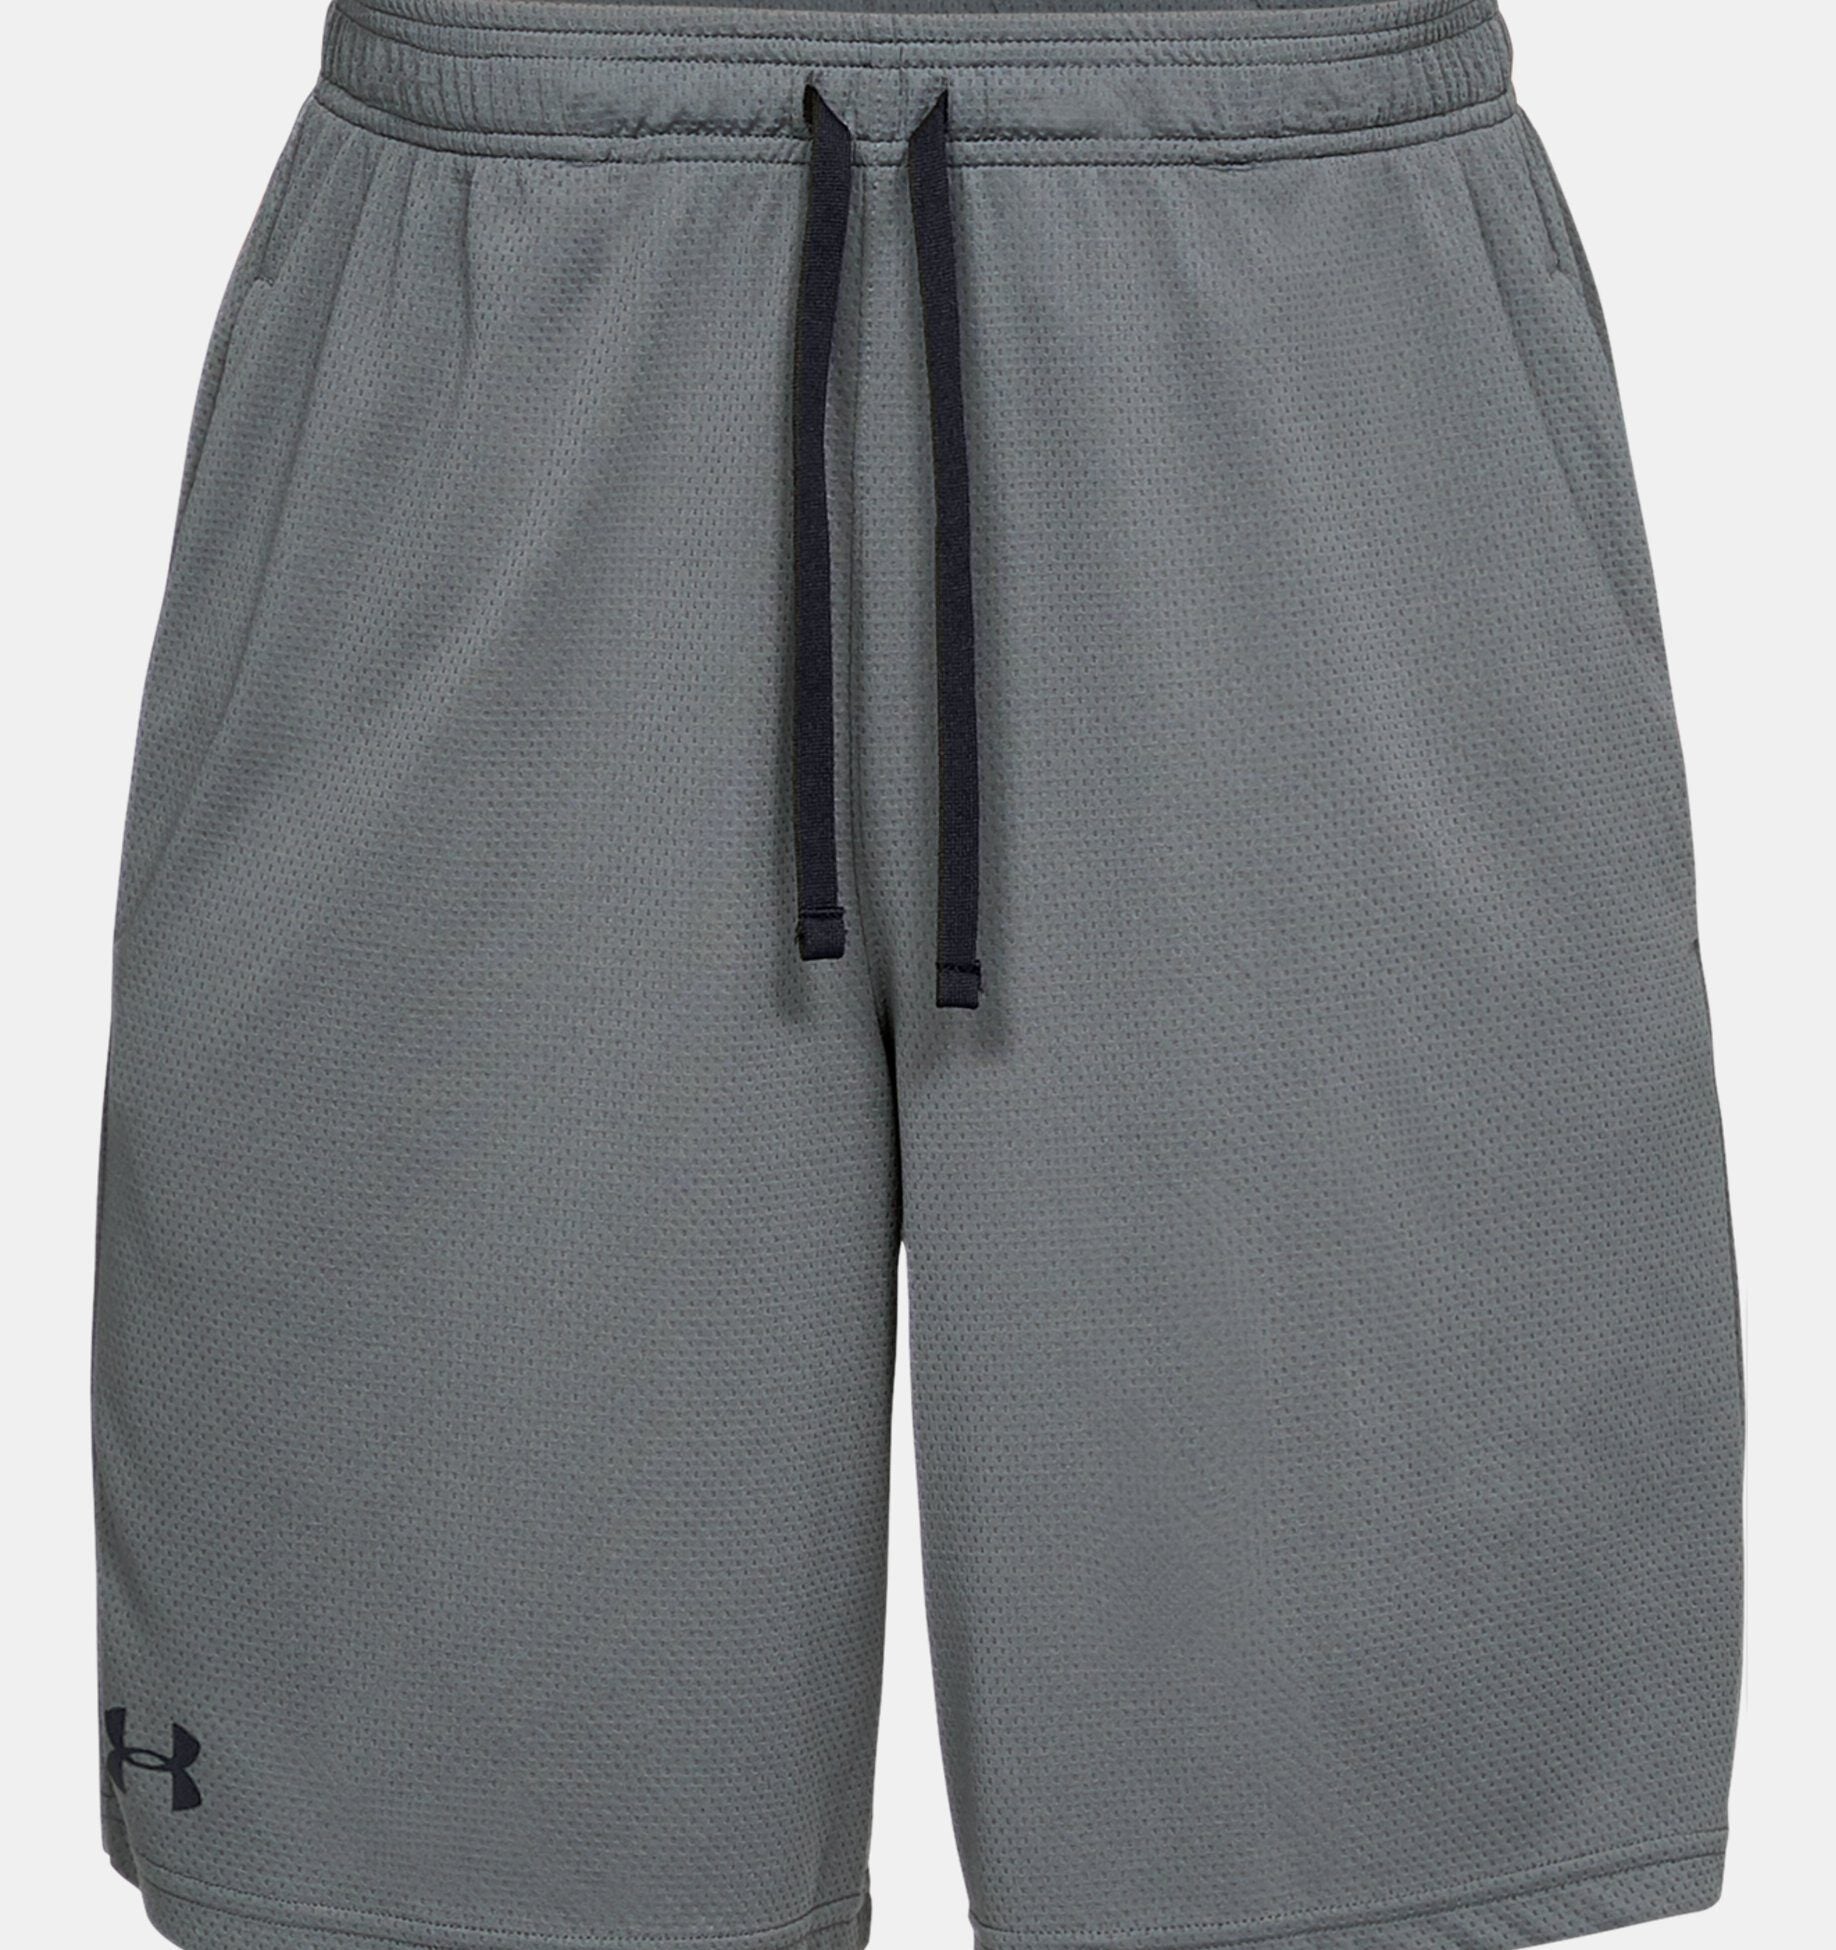 Under Armour Men's UA Tech™ Mesh Shorts 1328705 - Pitch Gray, XL